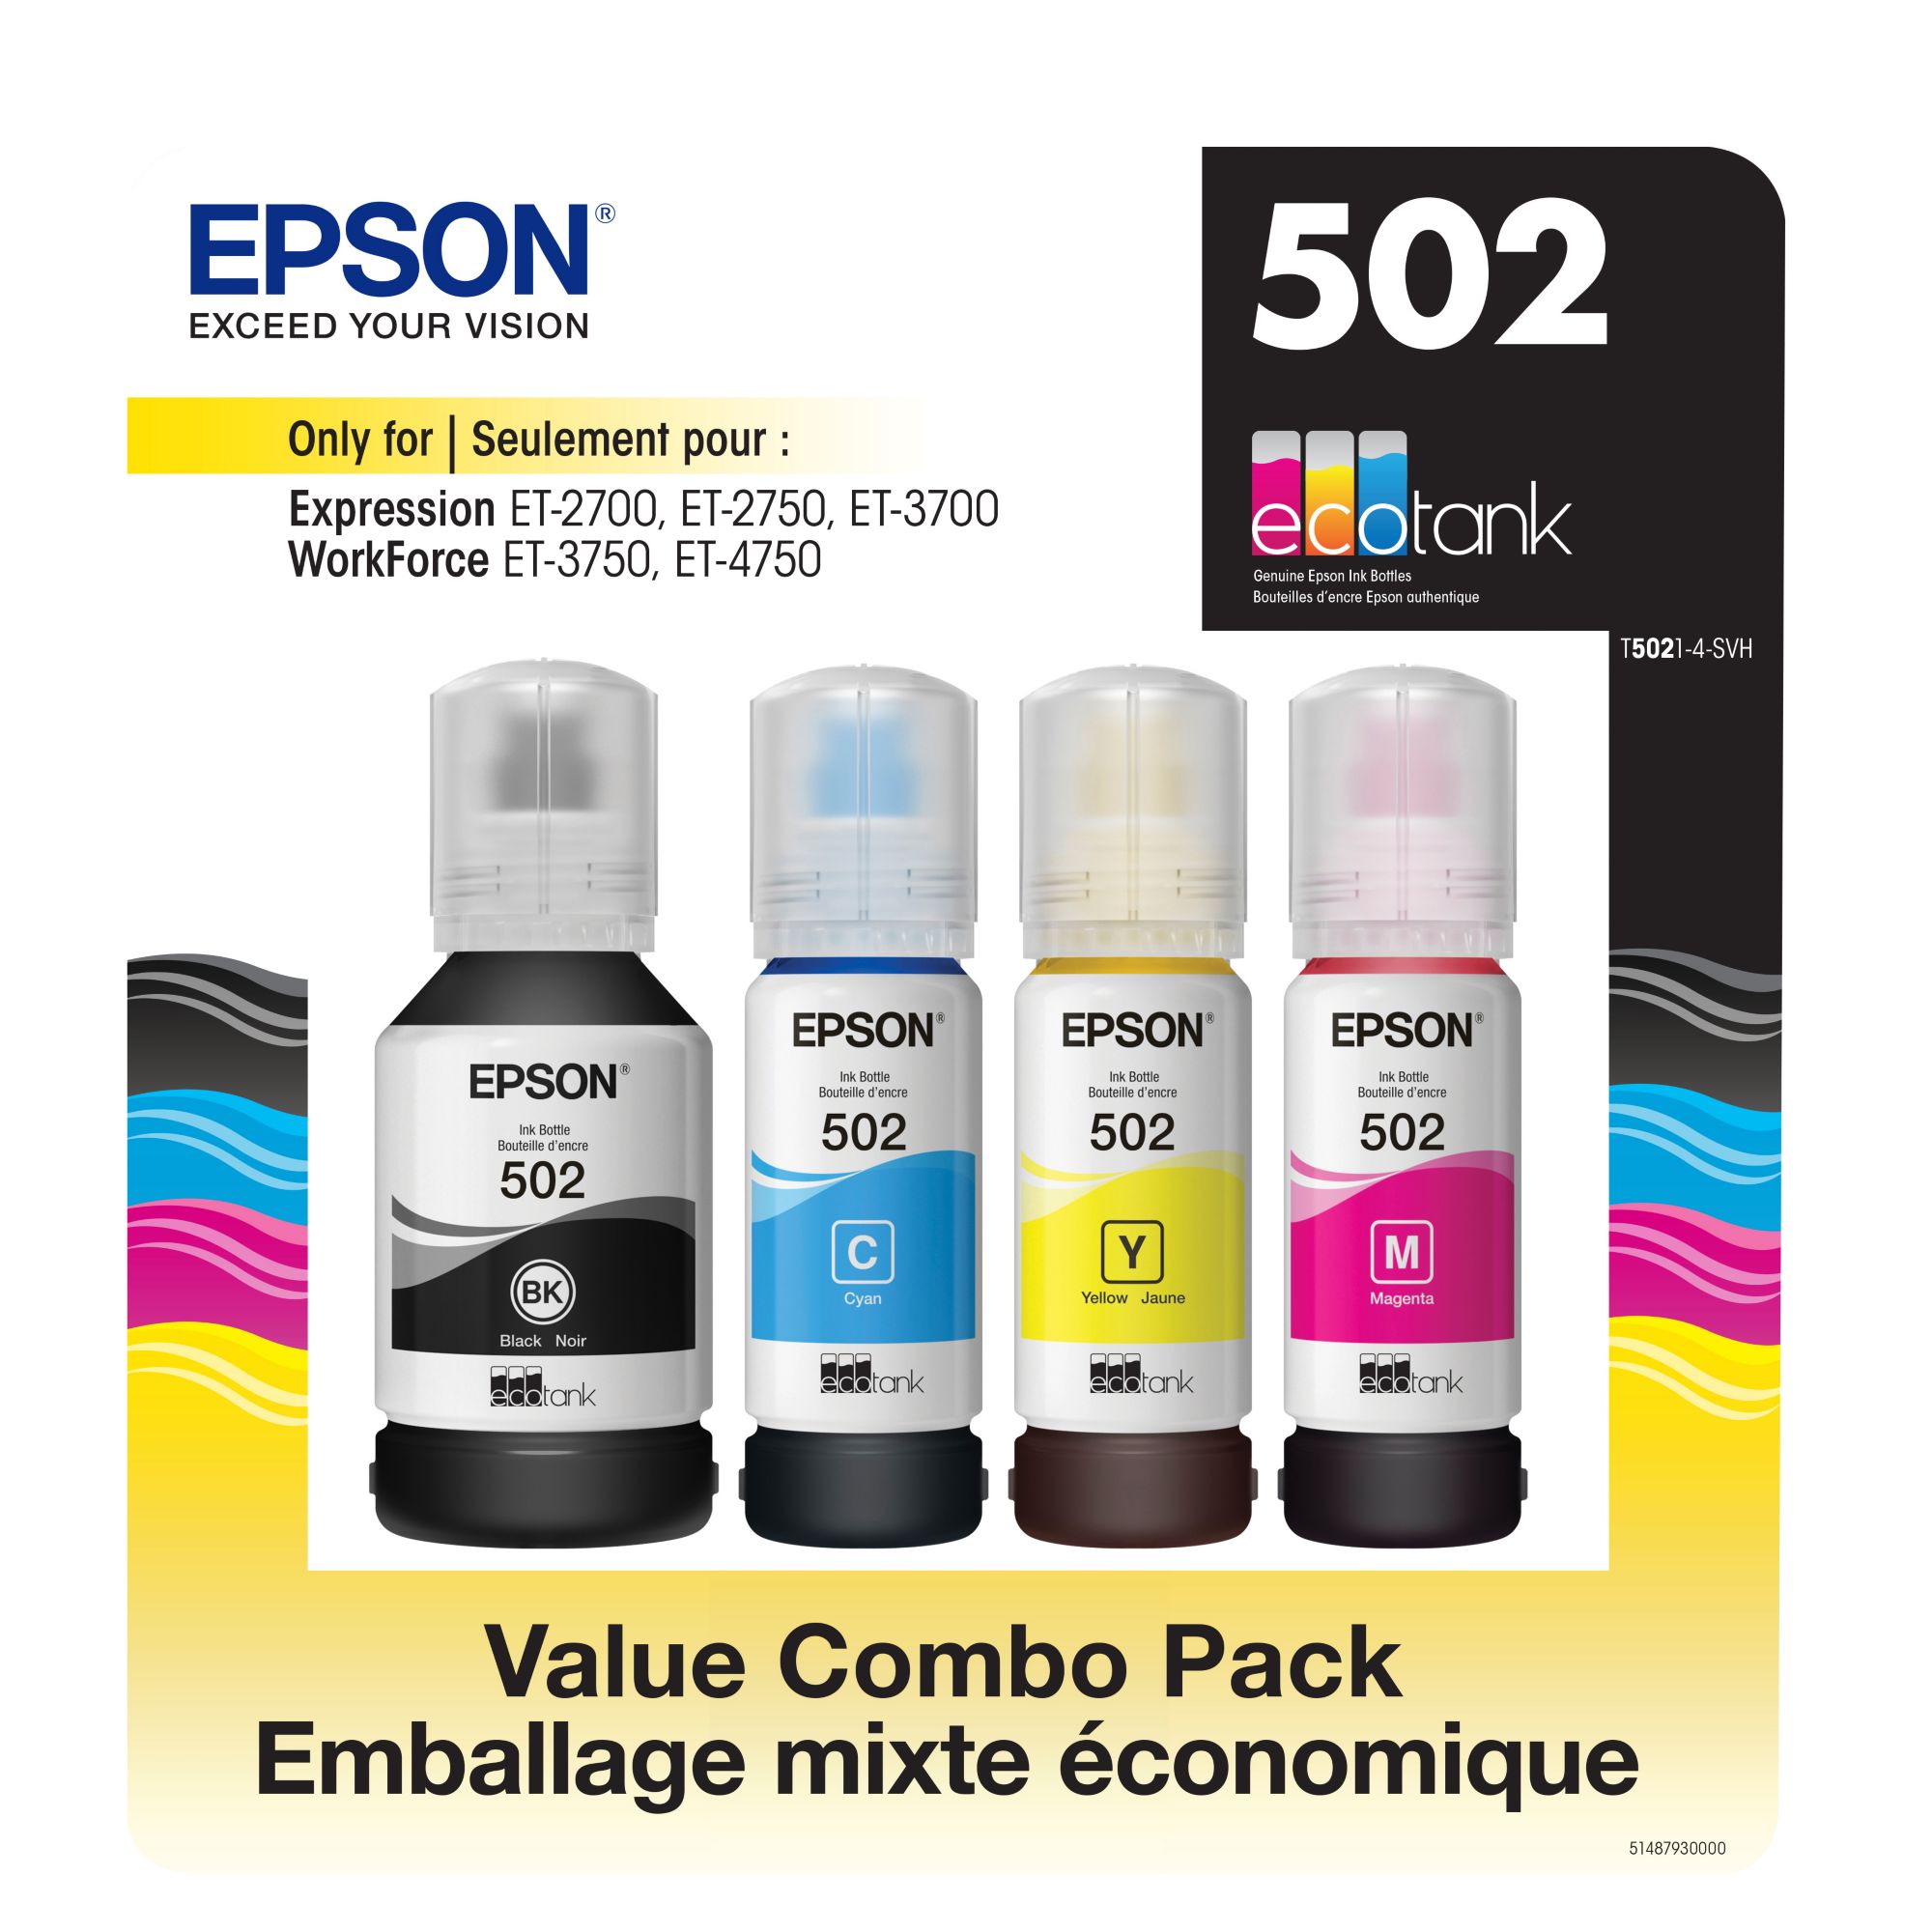 EcoTank T502 Ink Bottles